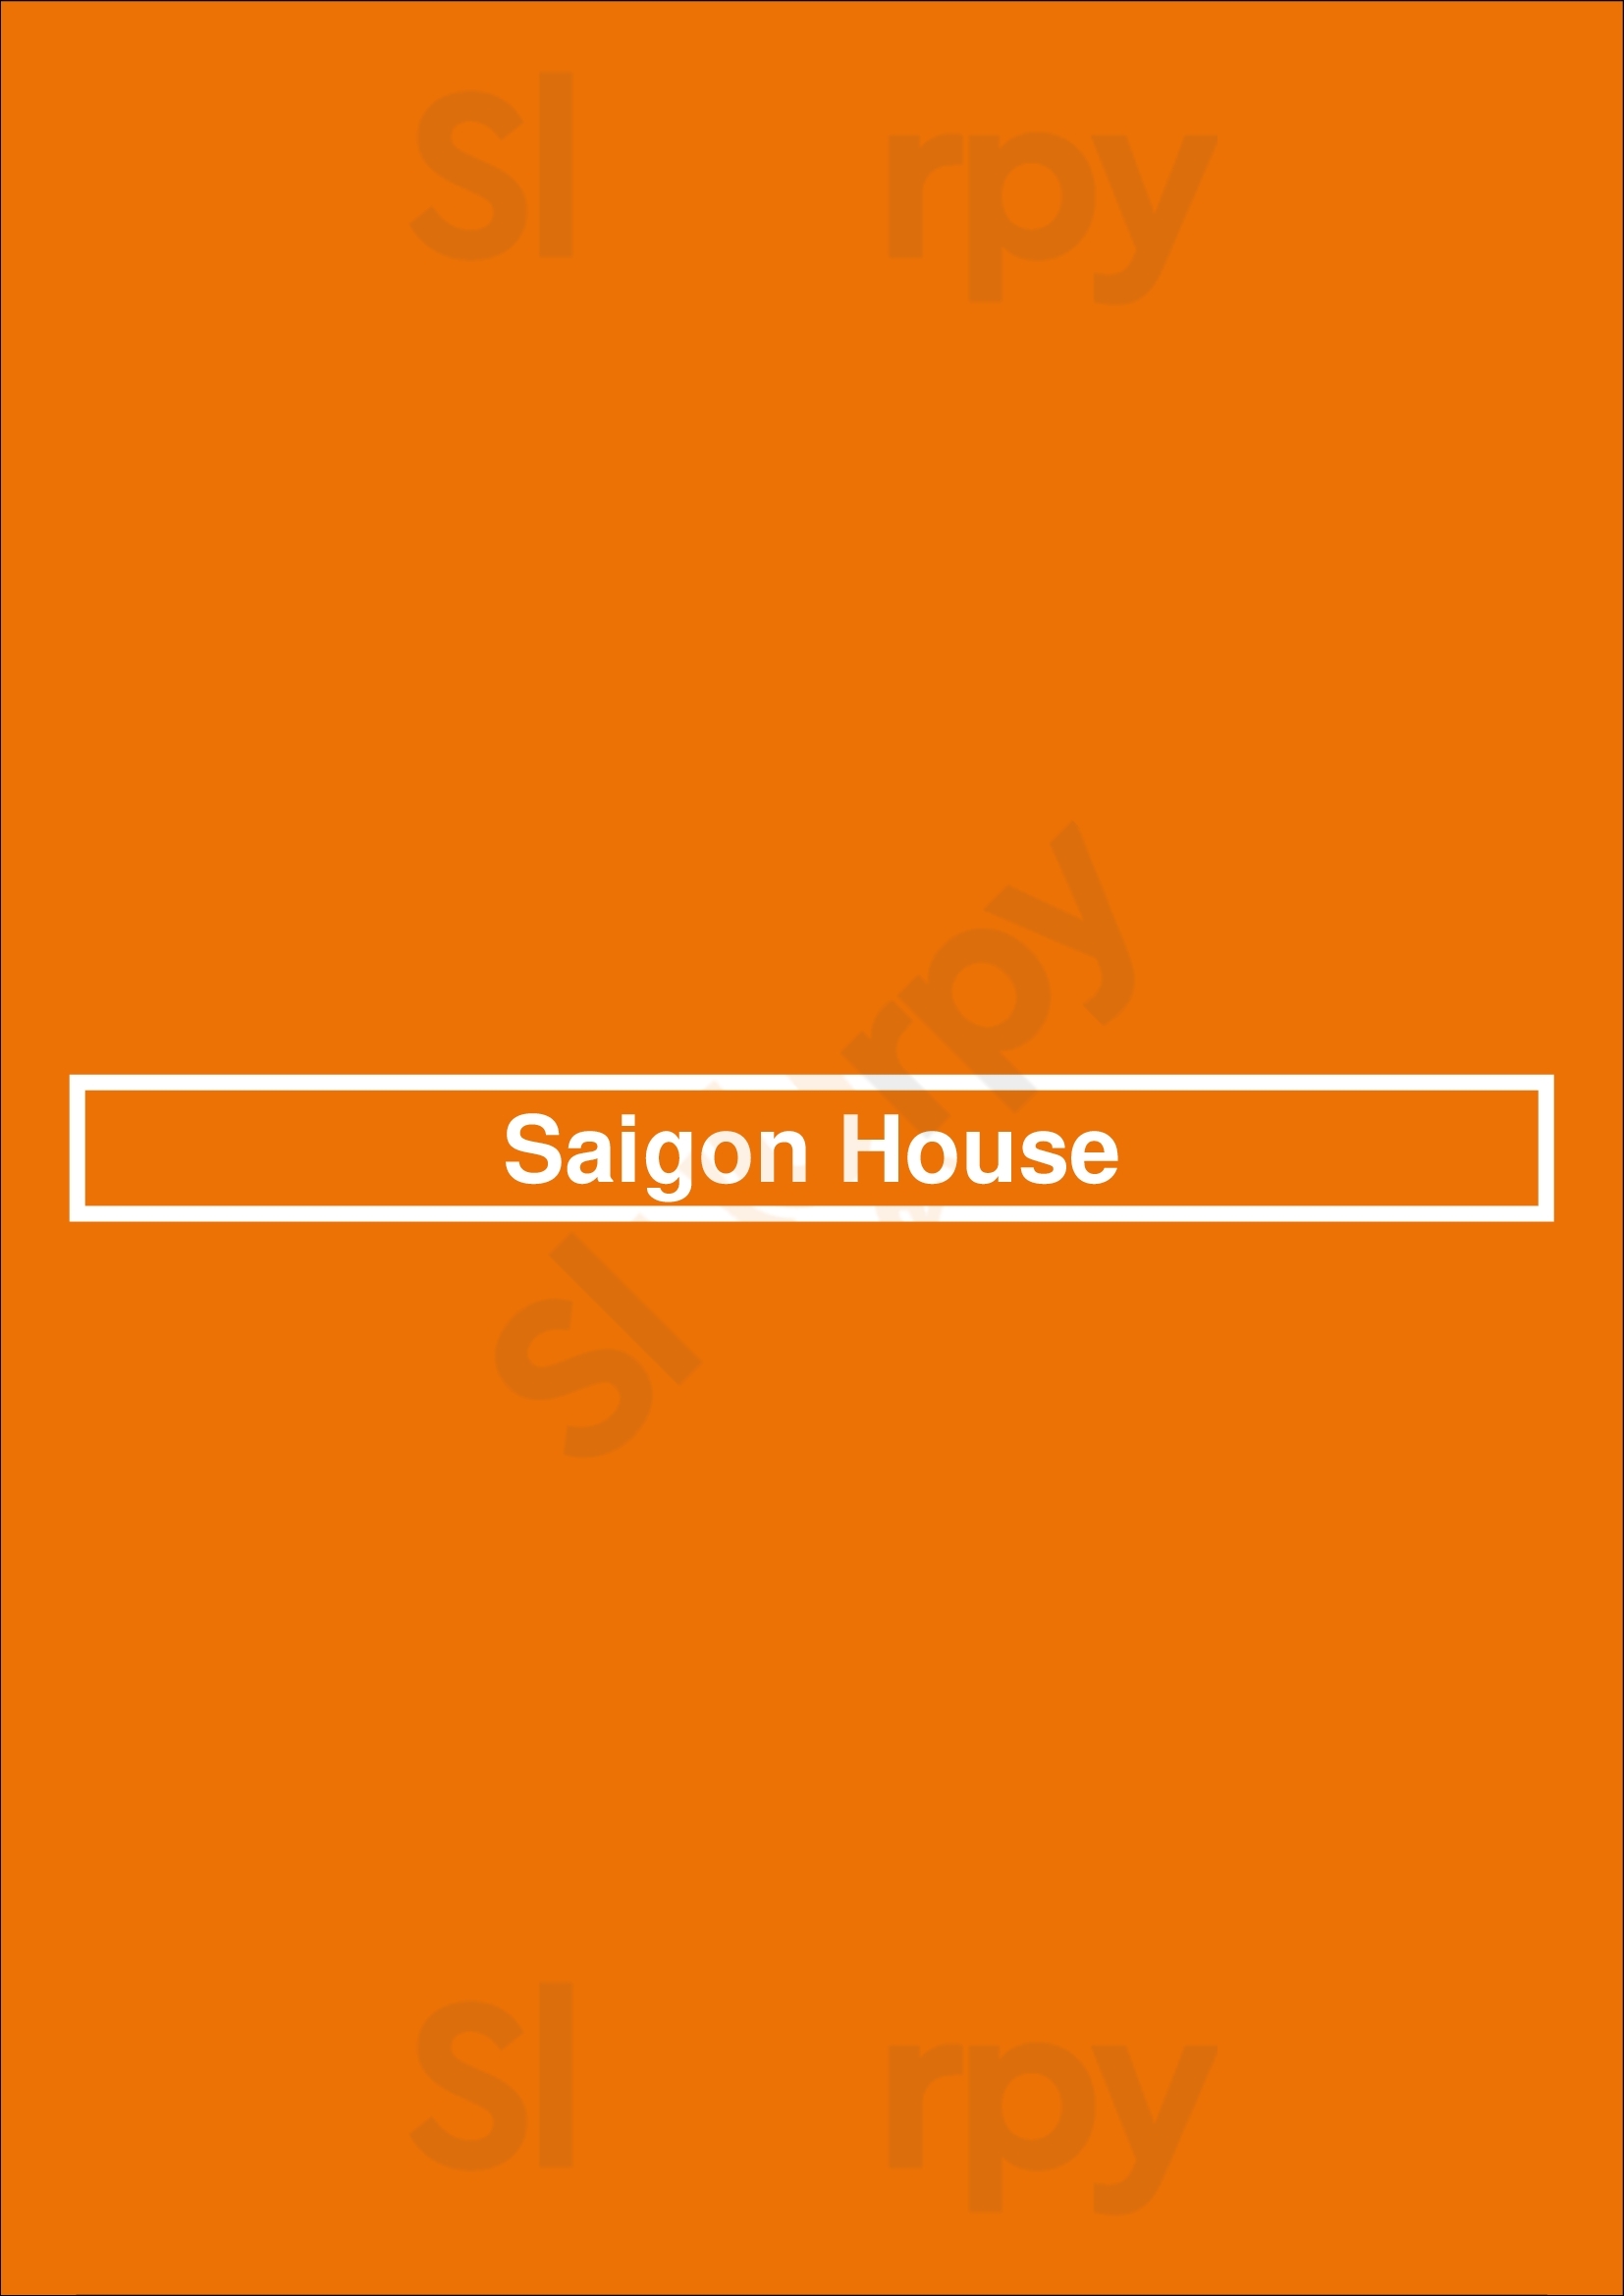 Saigon House Hamilton Menu - 1